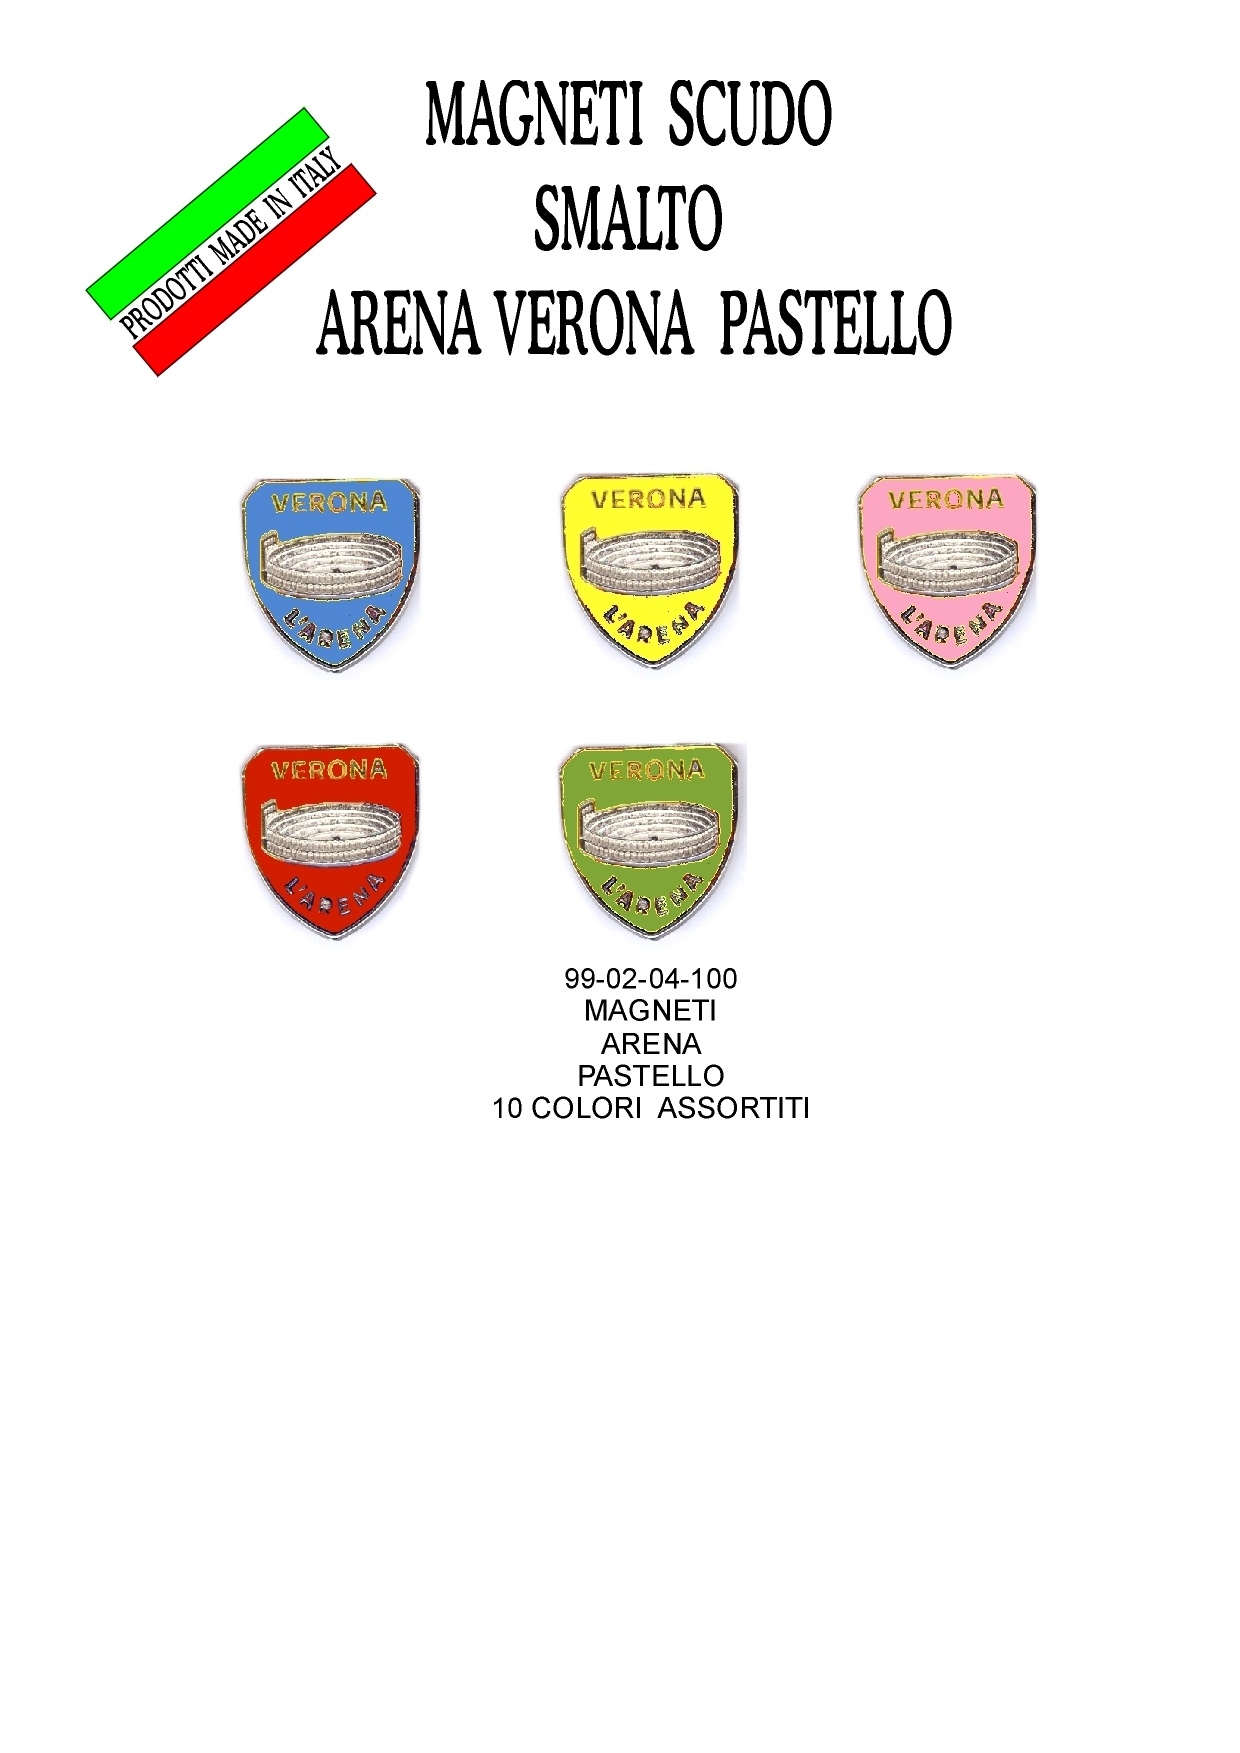 99-02-04-0100 Magneti Verona Arena Scudo Colori Assortiti CONFEZIONI da n.10 Pz.